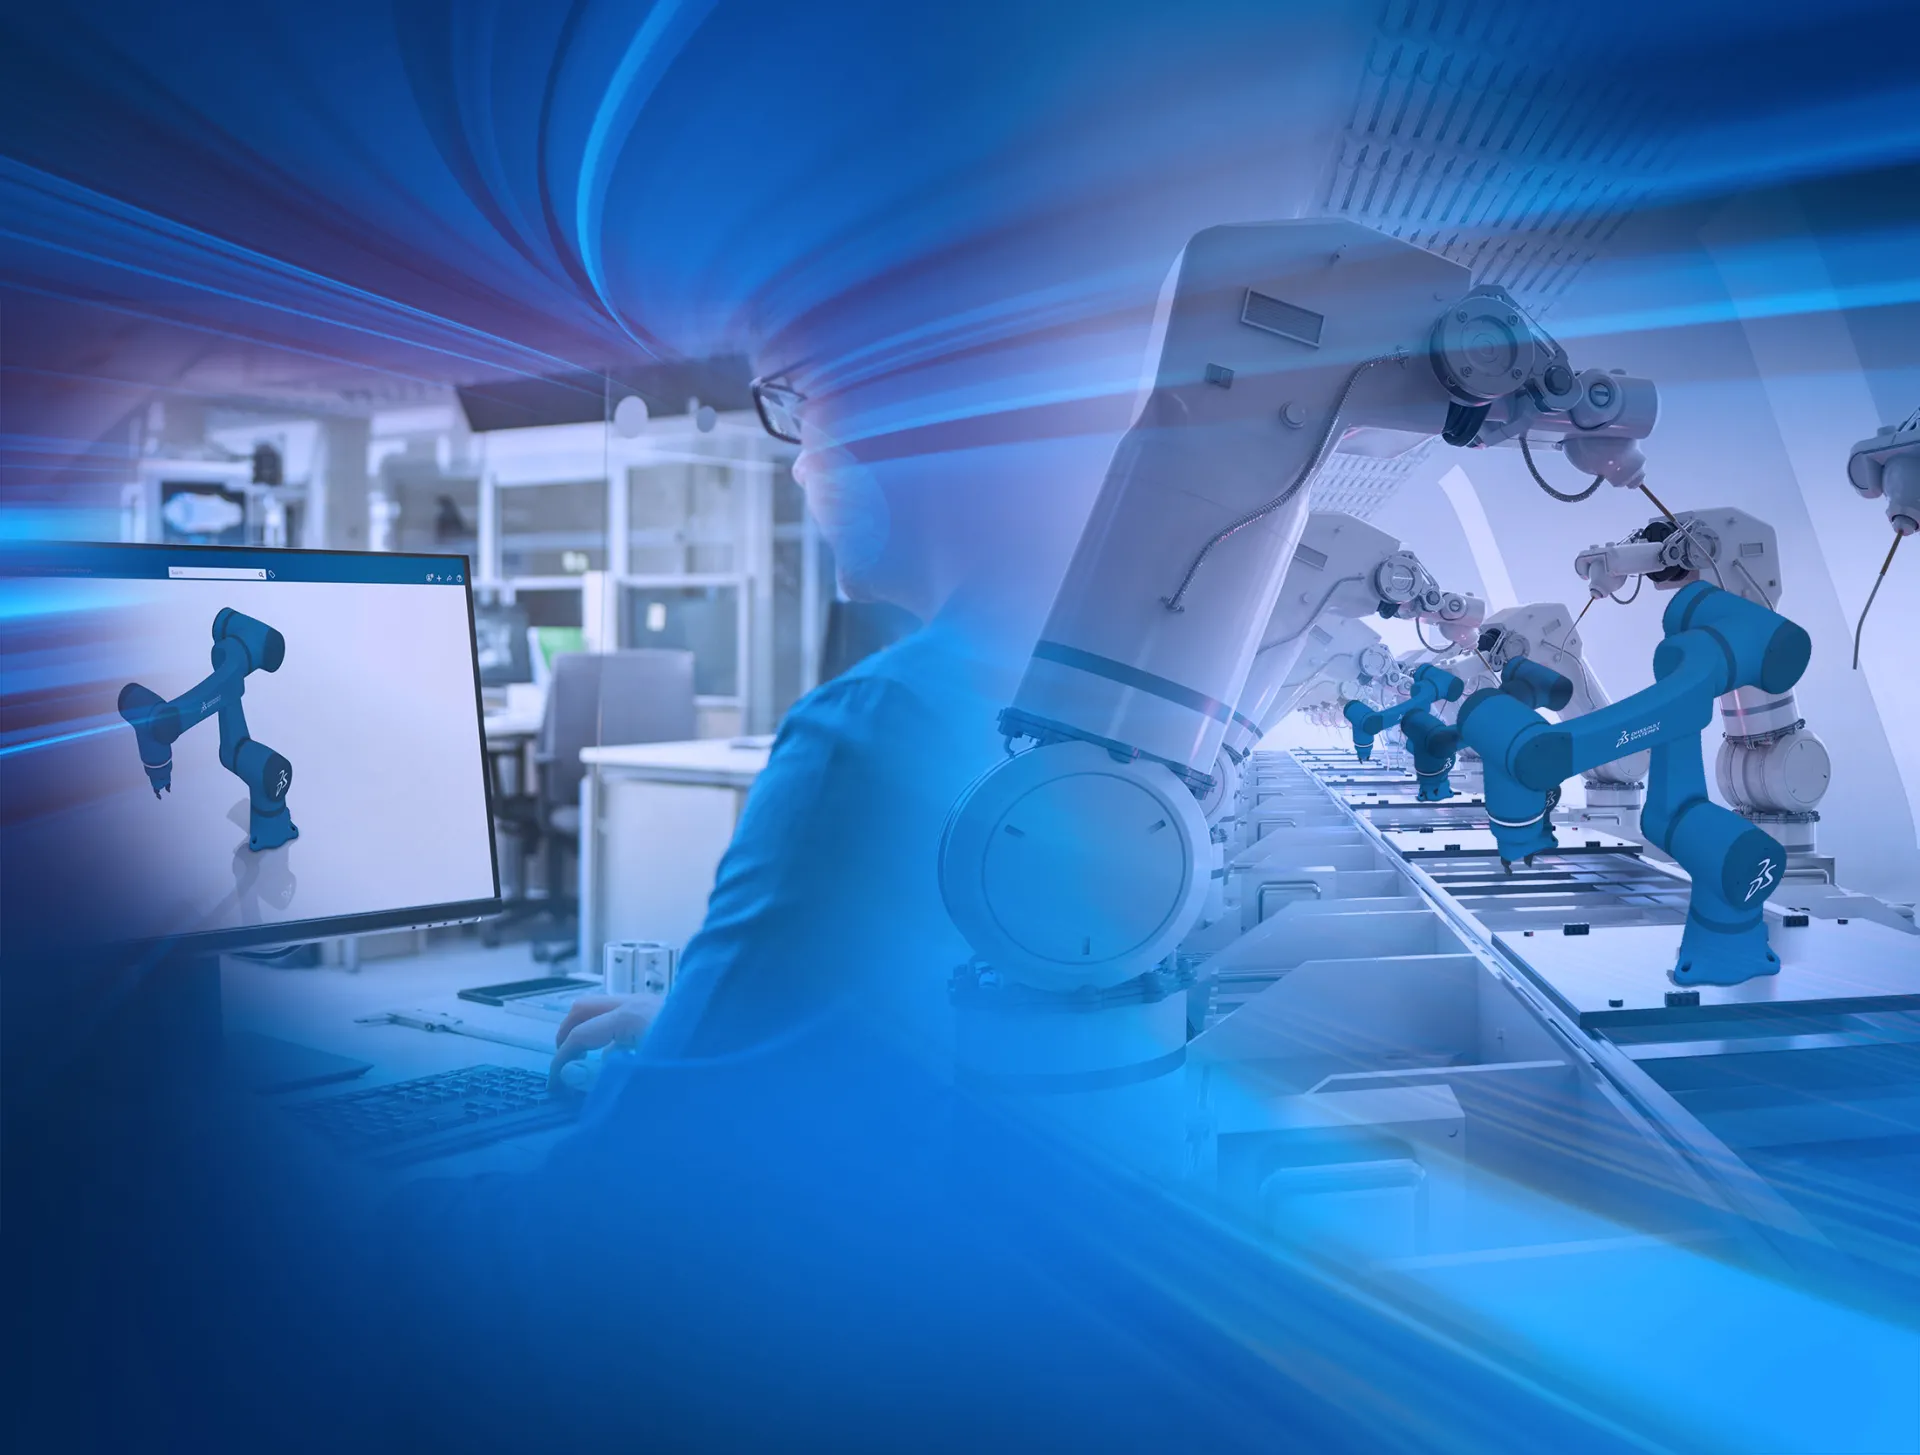 Engineering to Manufacturing Robotics